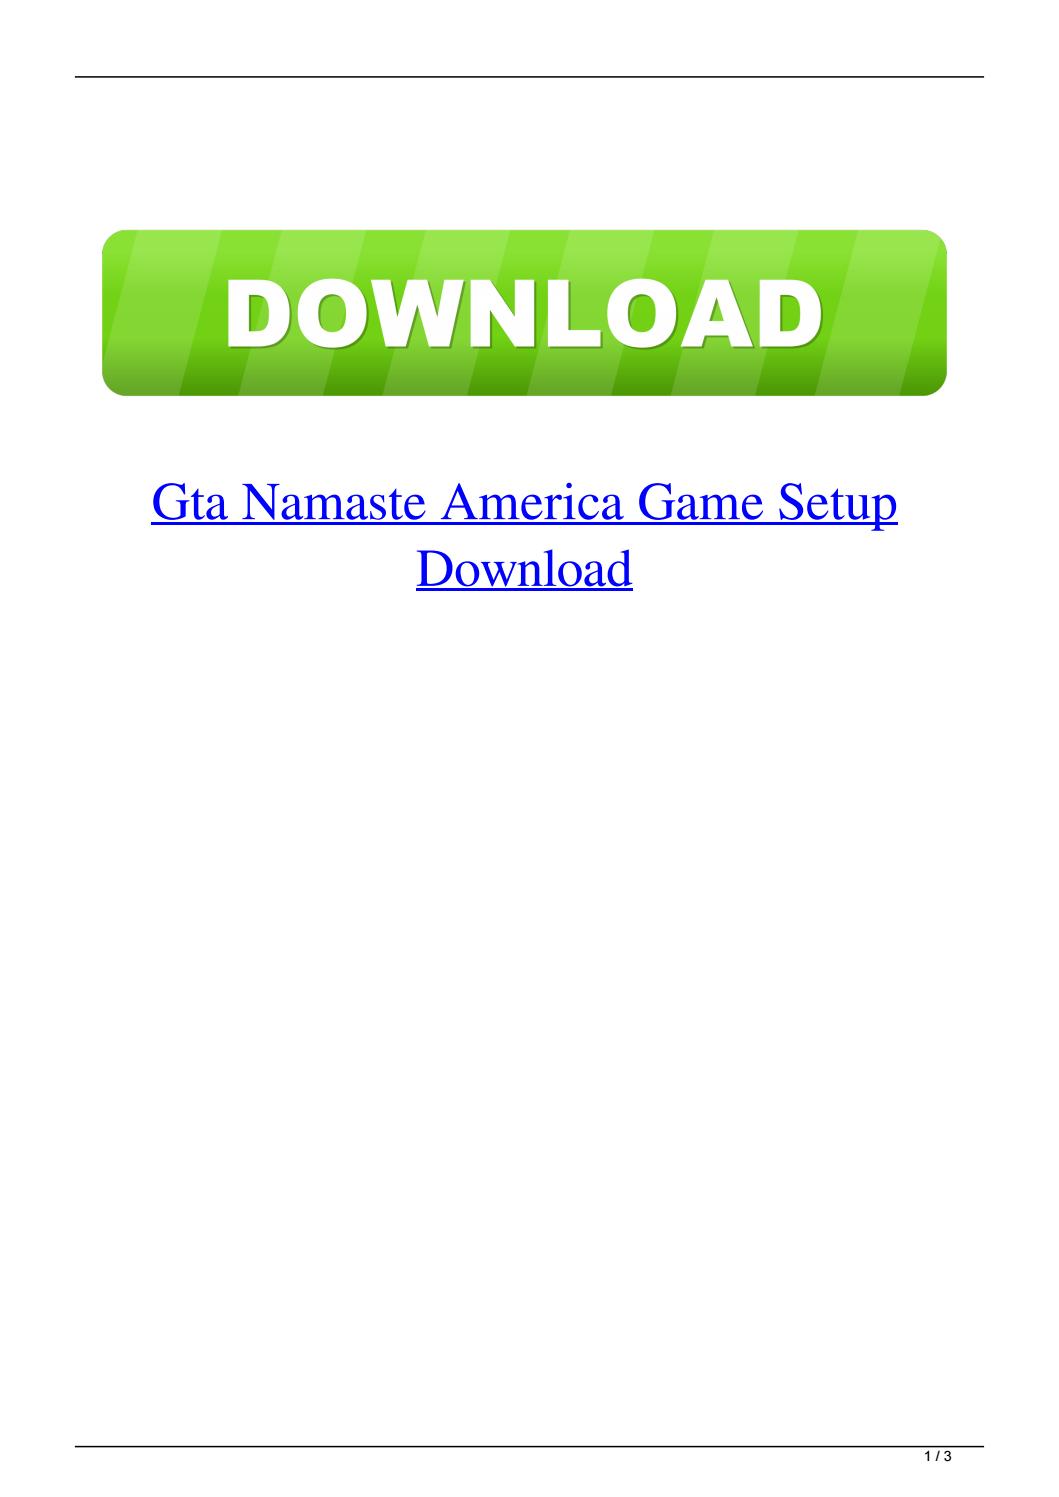 namaste america game free download for mobile